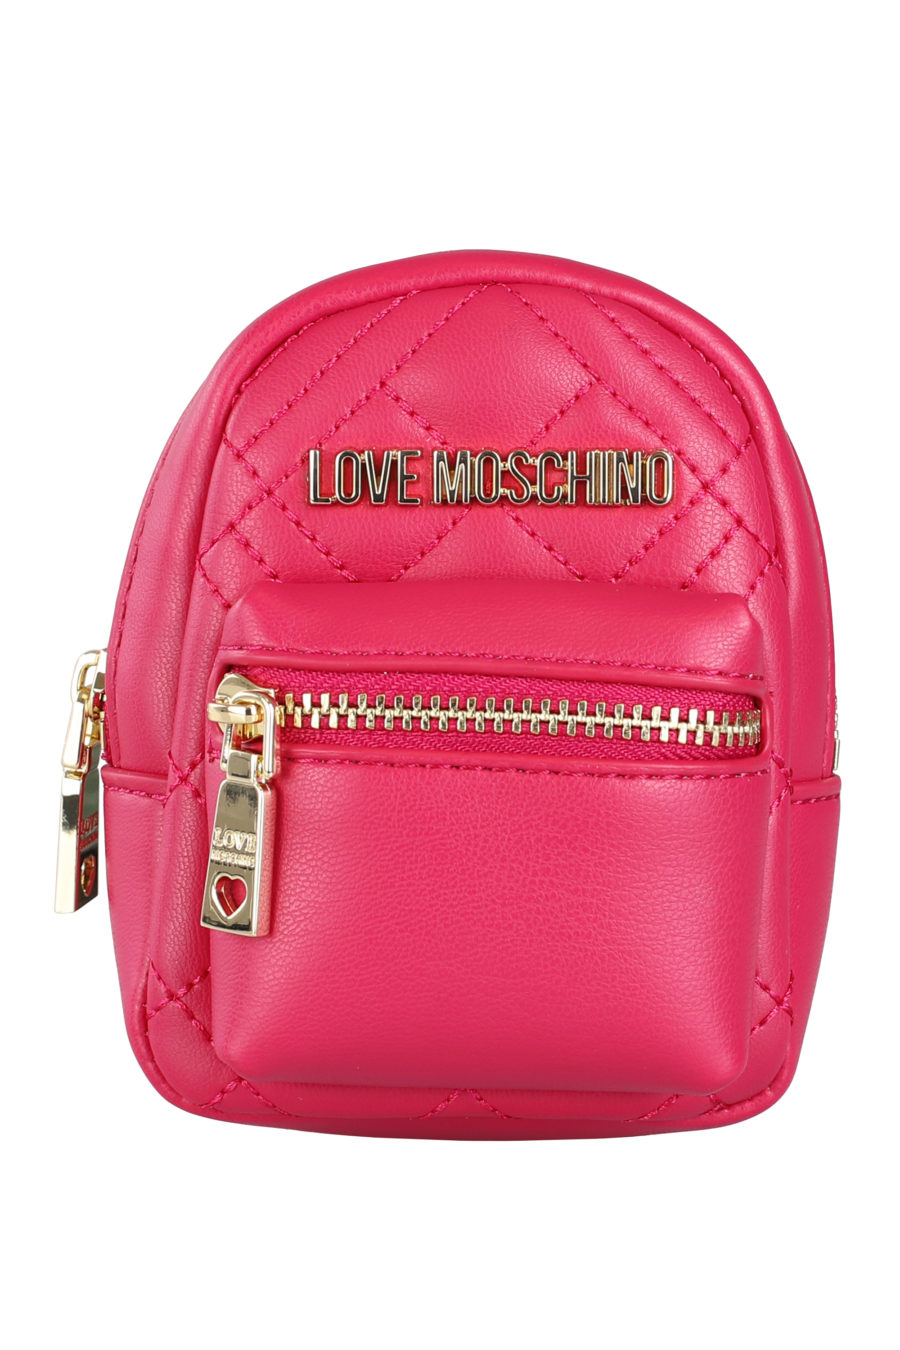 Llavero mini mochila rosa - IMG 9685